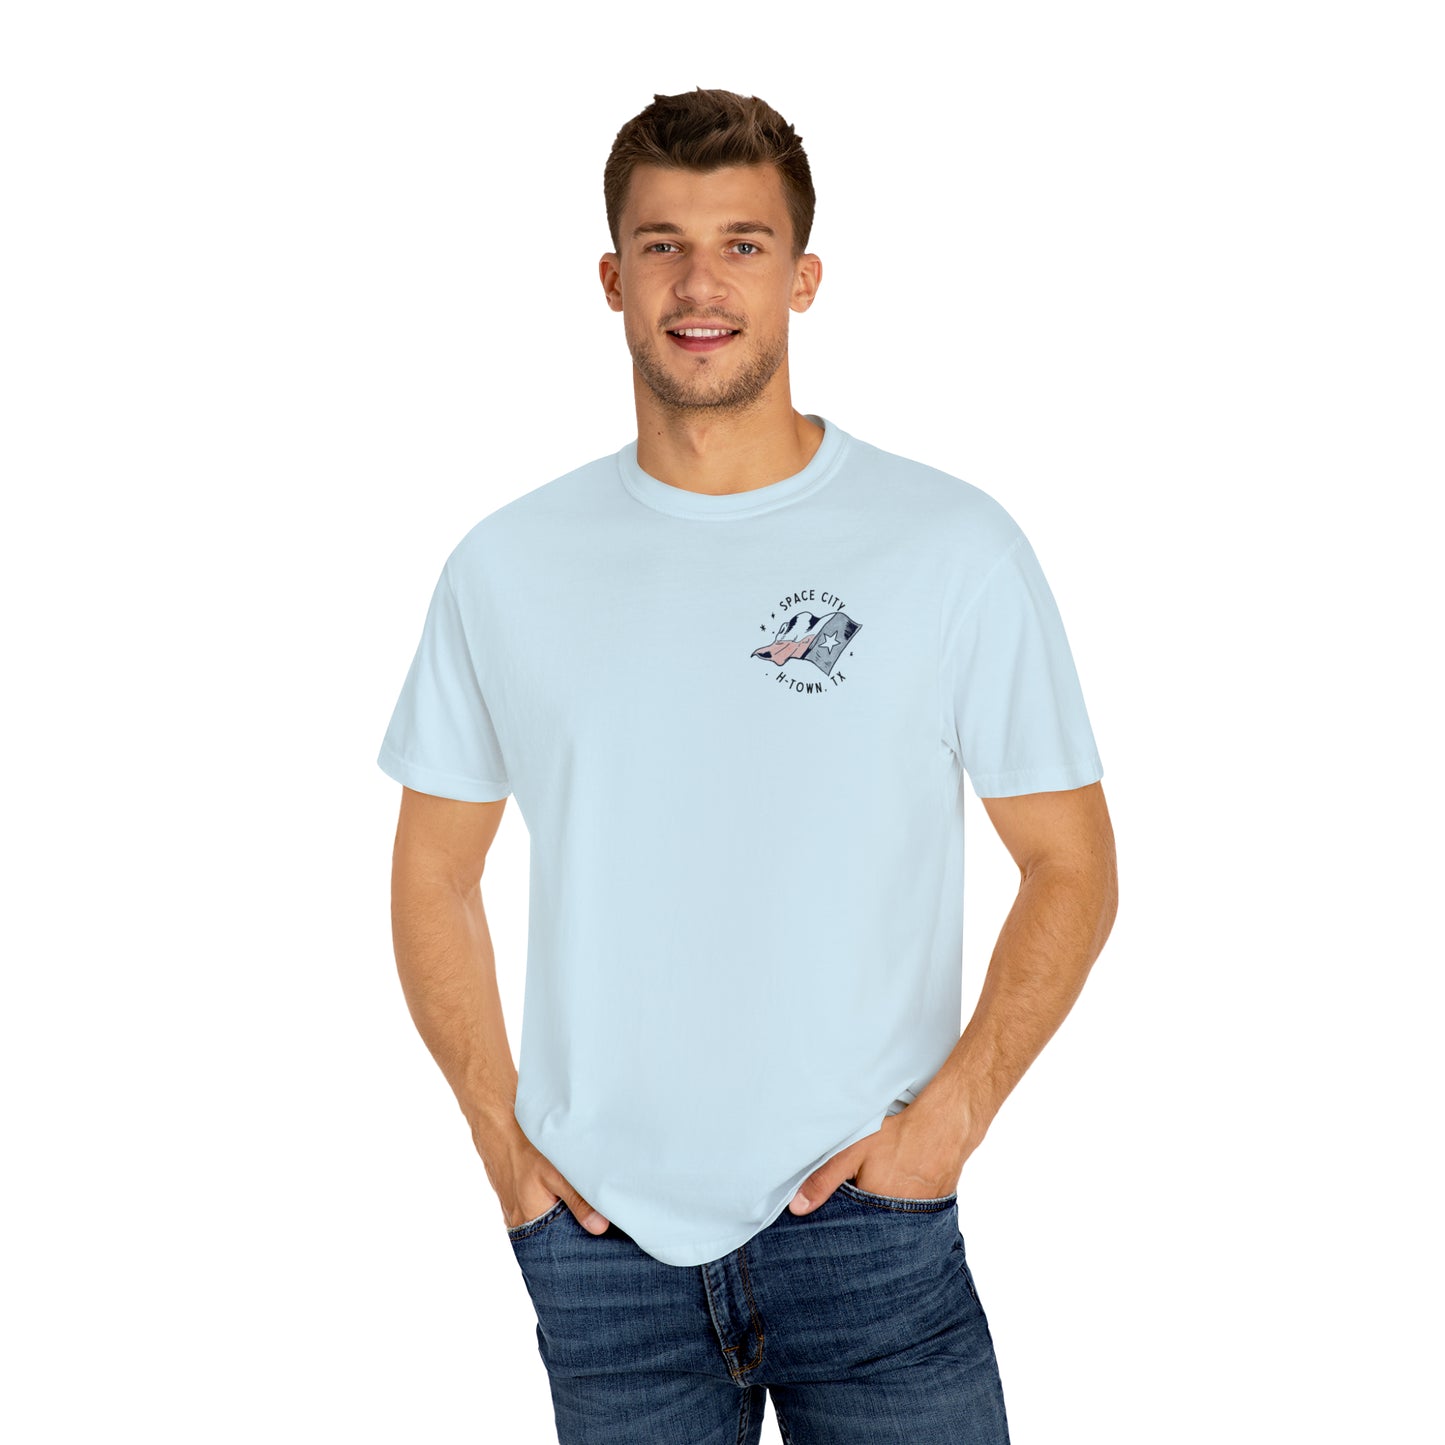 Space City Texas (Saturn) Premium Unisex Comfort Colors T-shirt